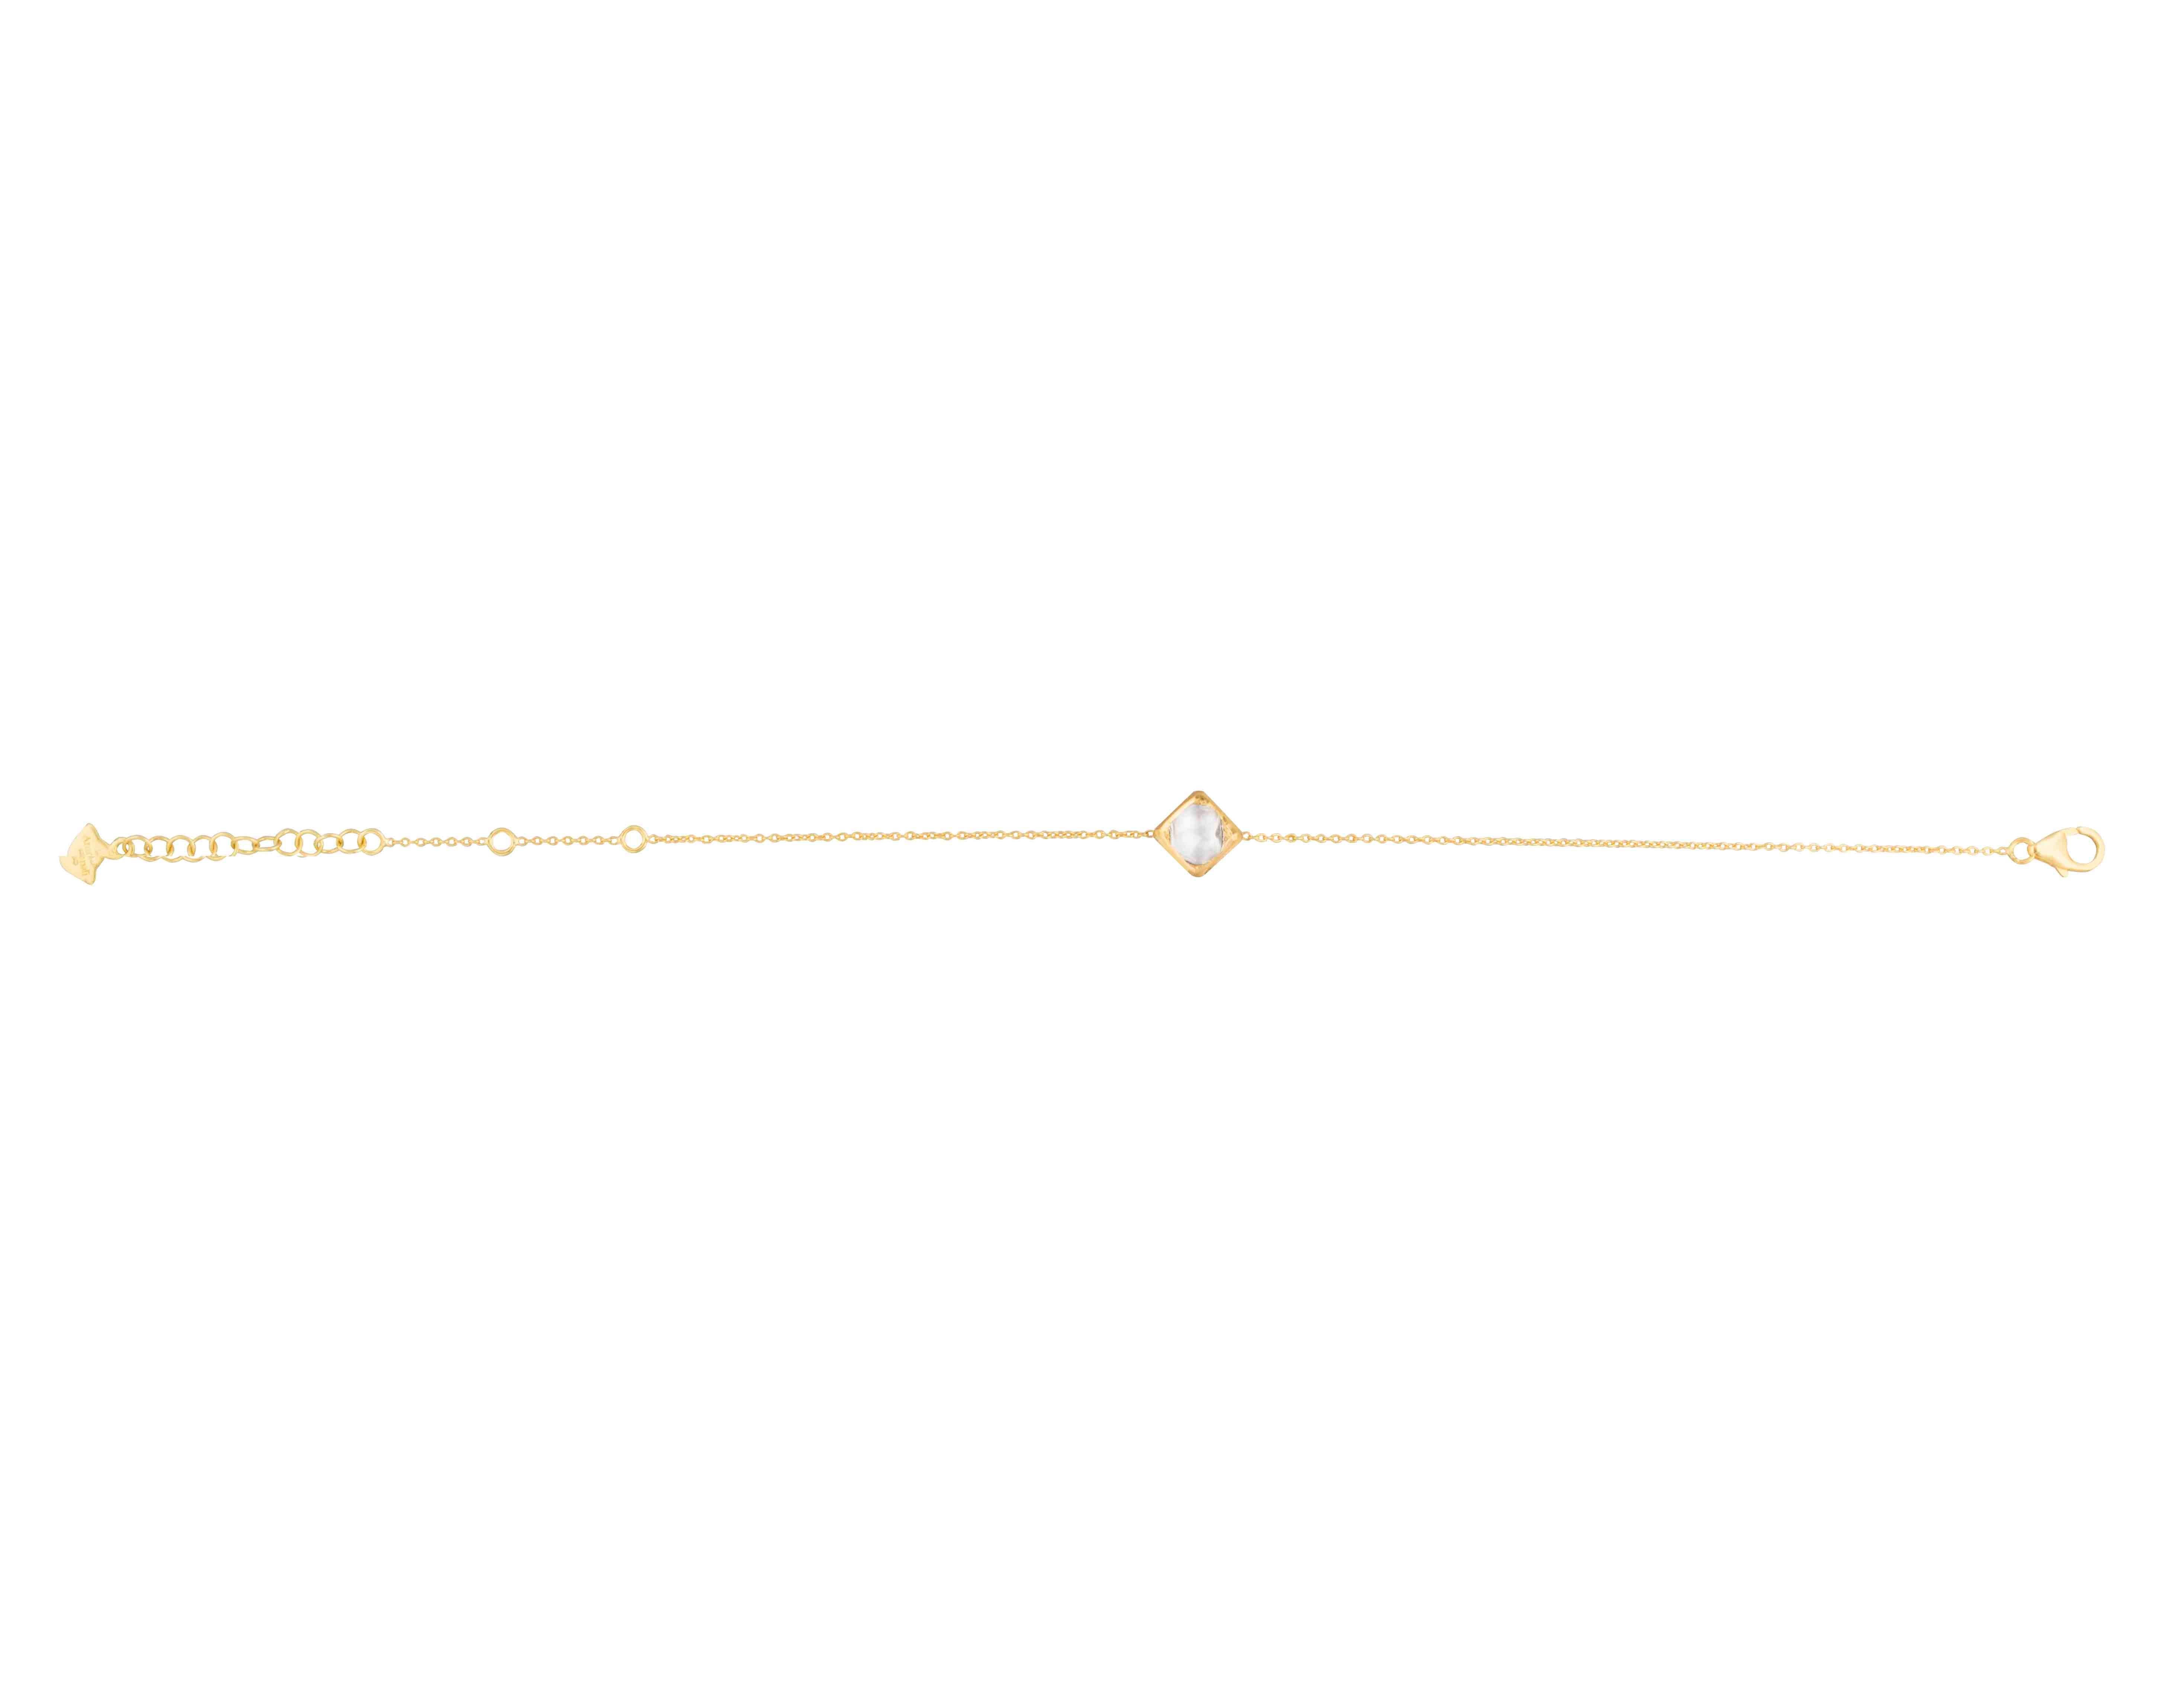 Amrapali Jewels 18k gold and Diamond bracelet  

Diamond weight - 0.040ct

Length - 6-8in